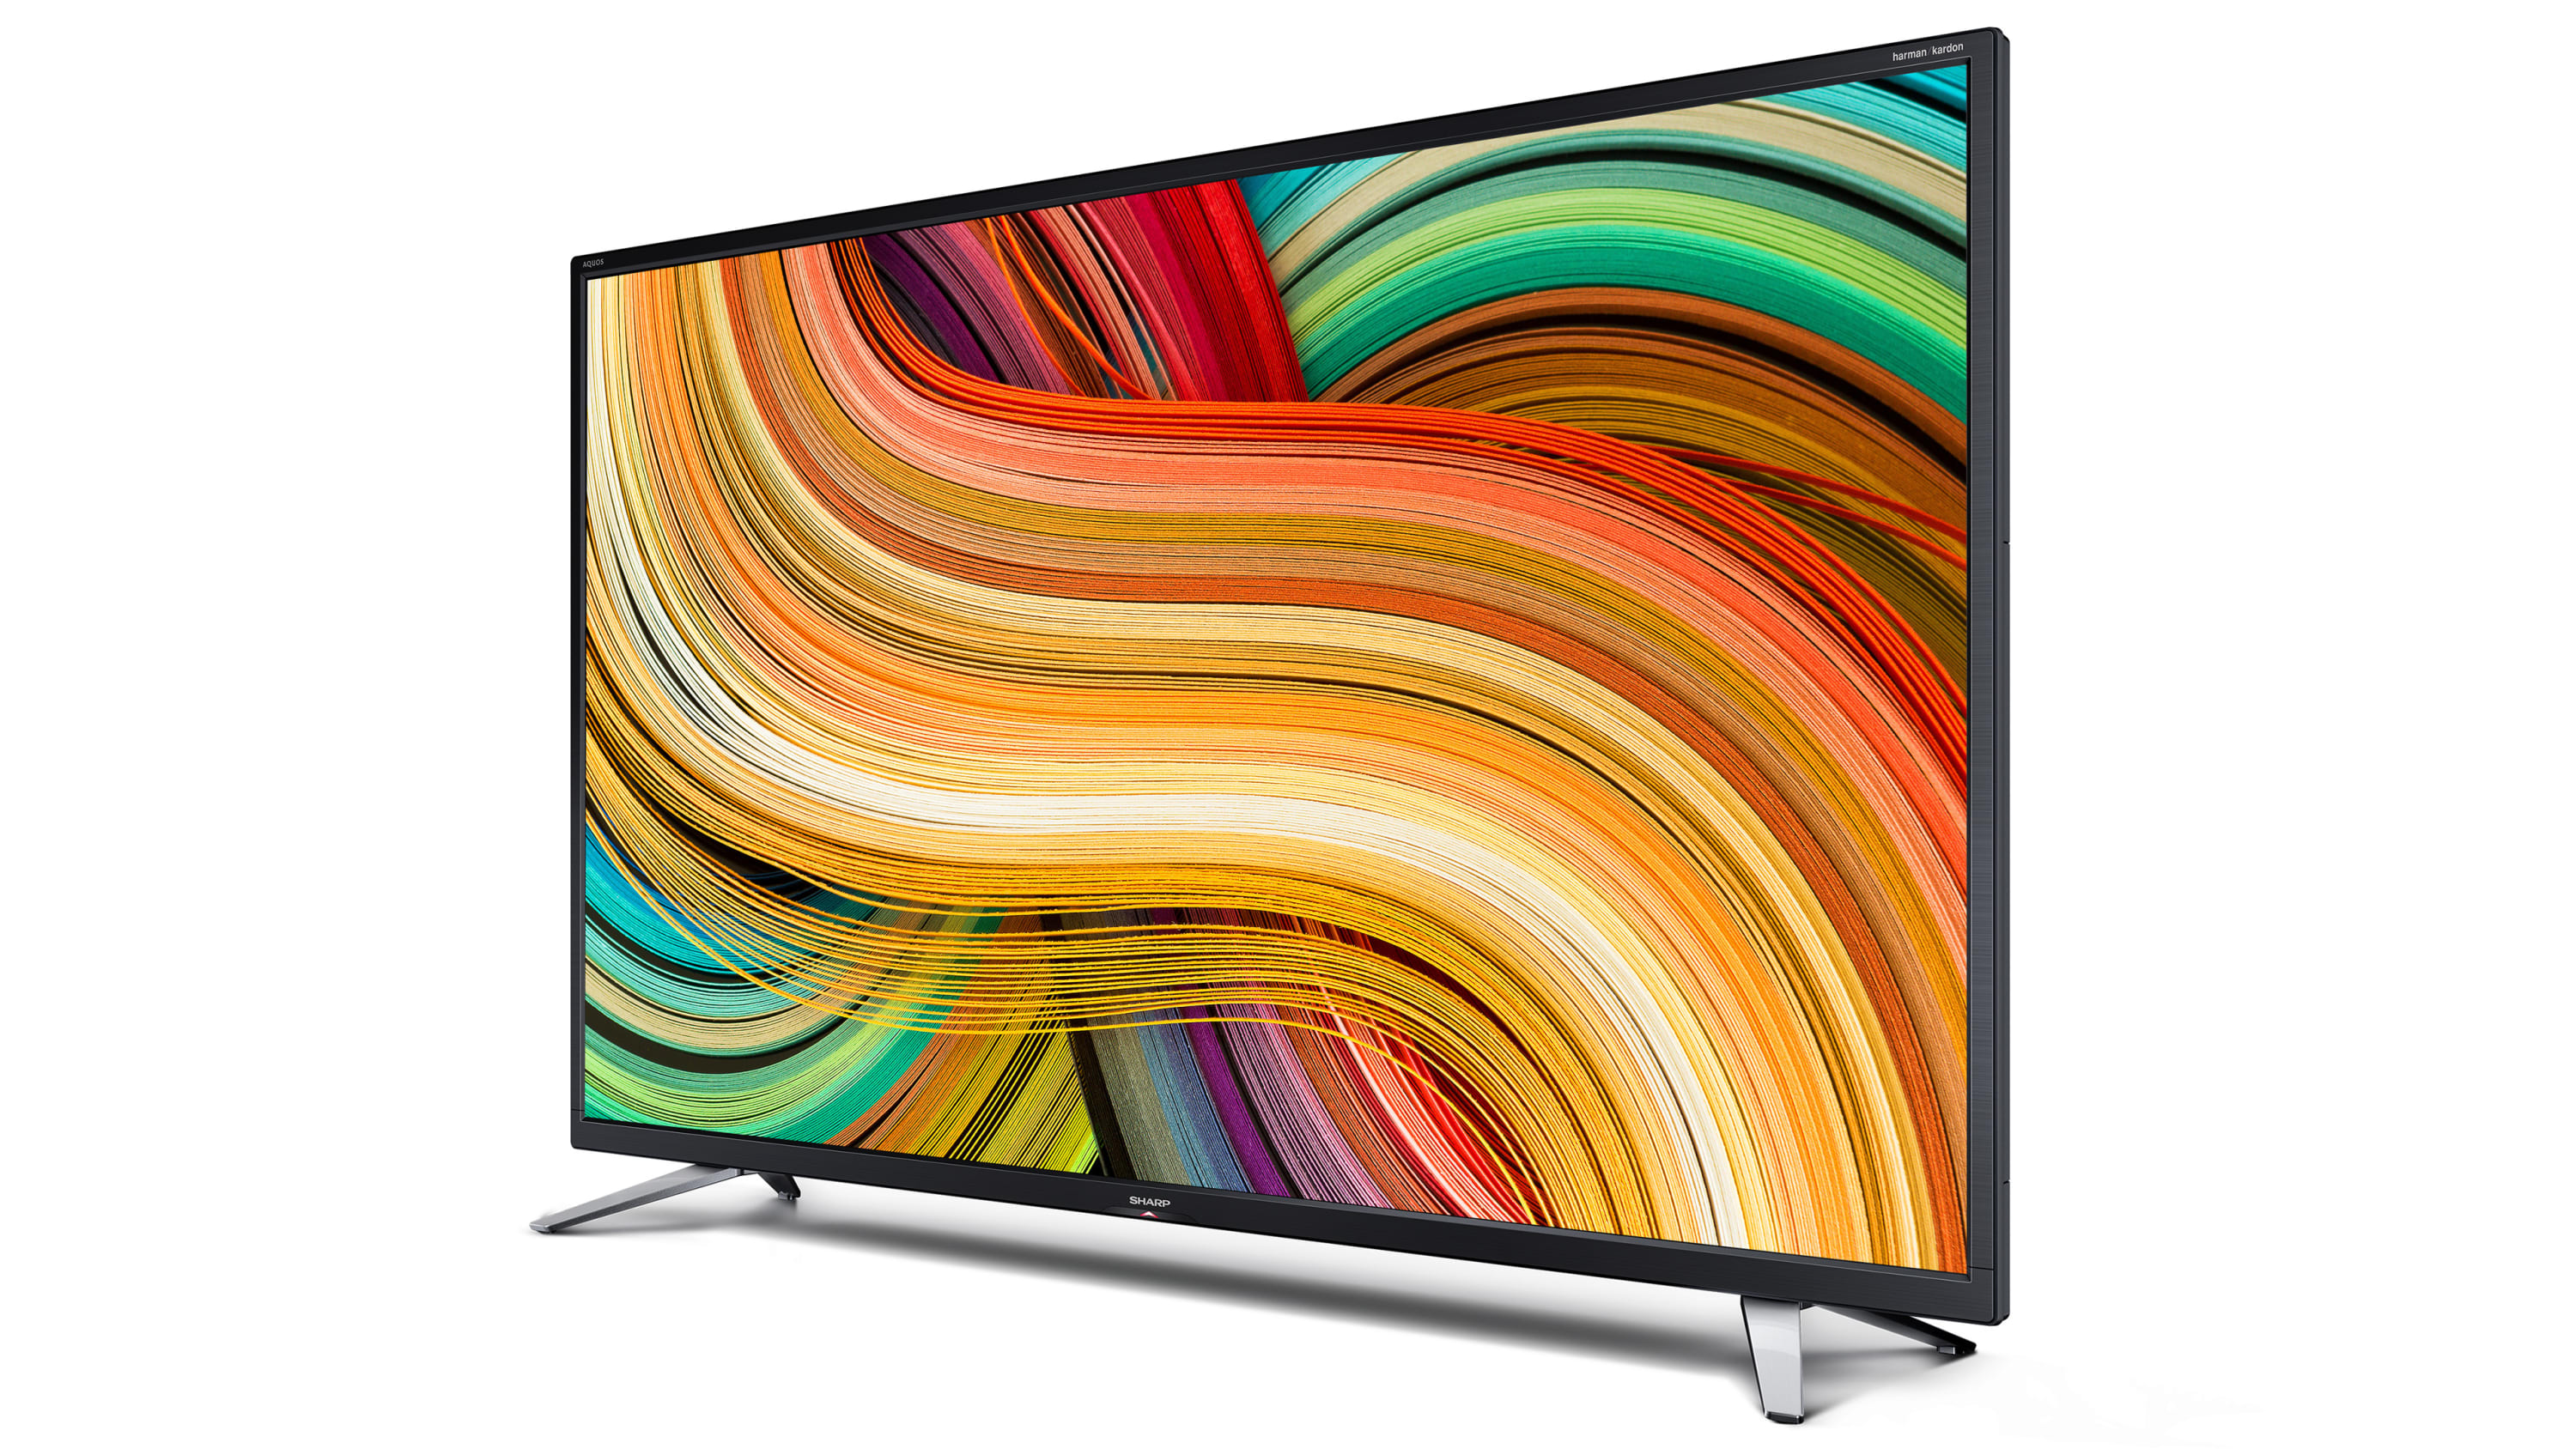 Smart-TV, HD/Full HD - 40" FULL HD SMART